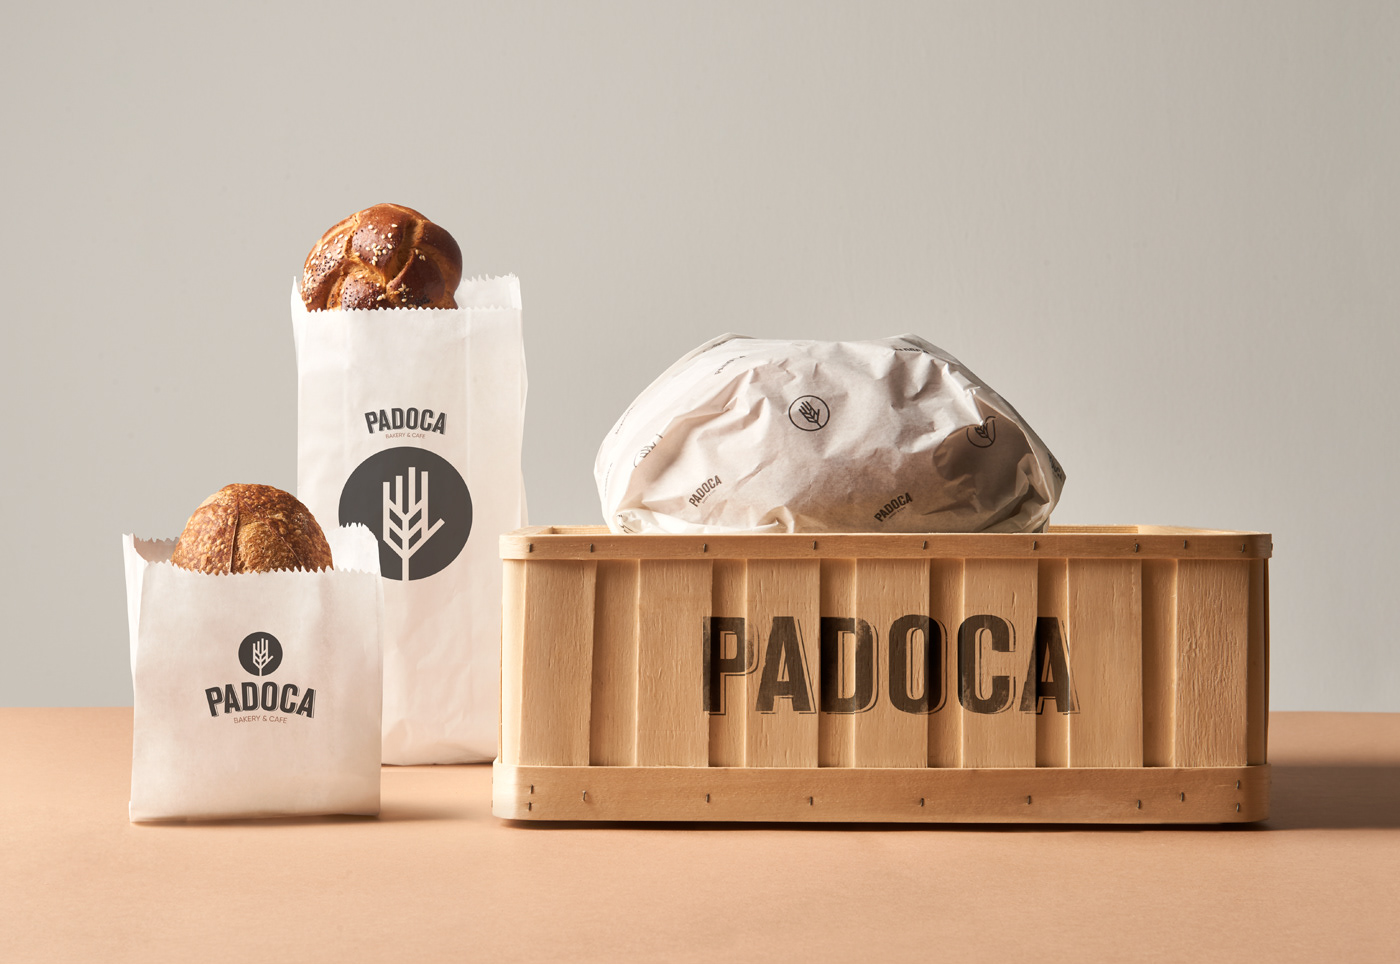 cafe bakery hand wheat bread Padoca istanbul artisan bread ekşi maya FIRIN